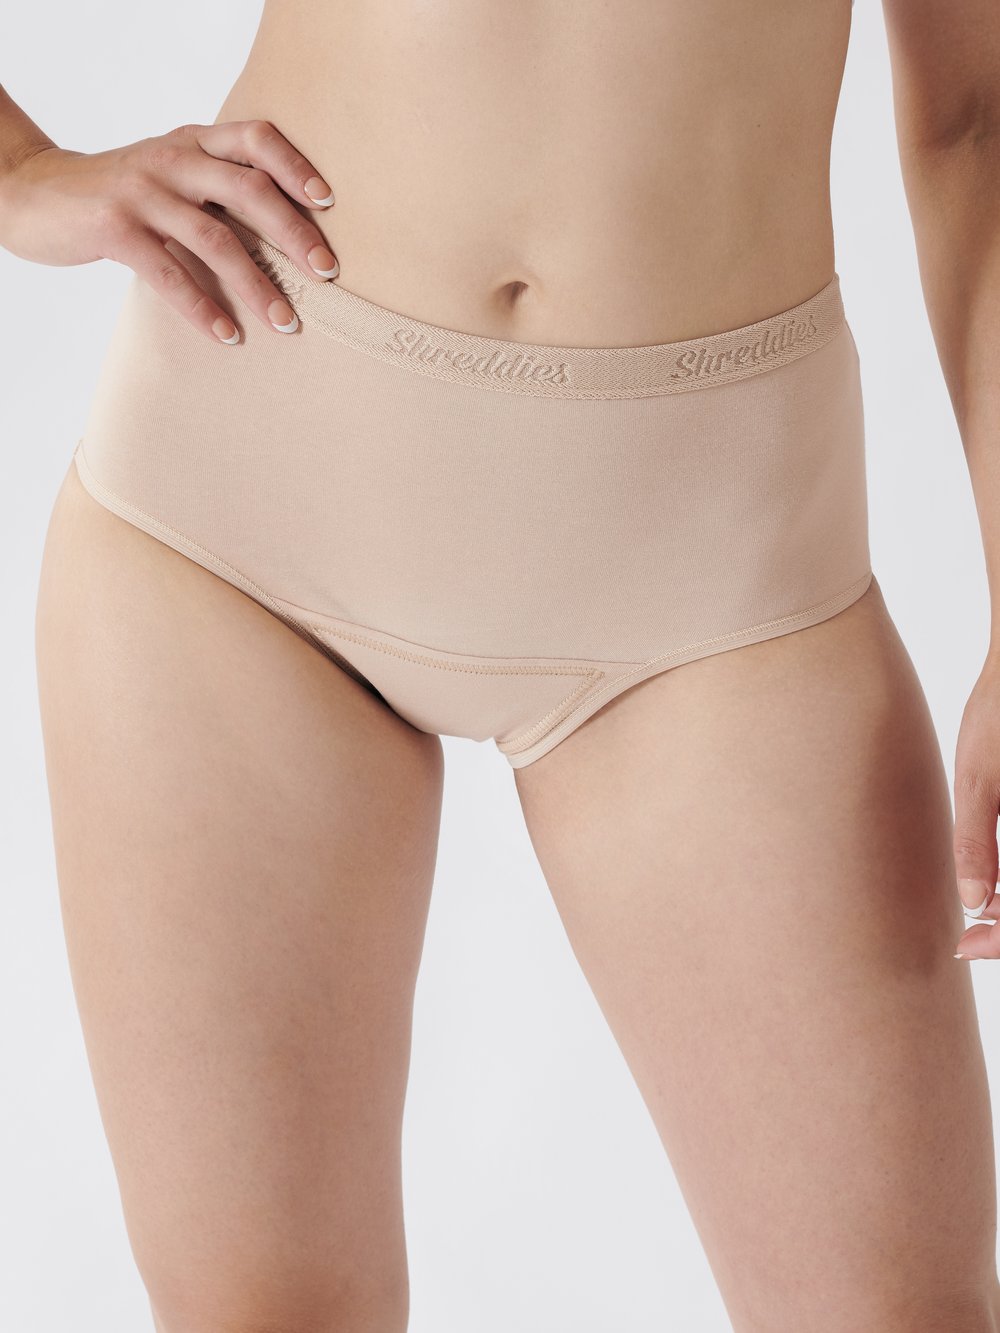 Buy Shreddies Women's Flatulence Filtering Brief Underwear (Black_XL) at